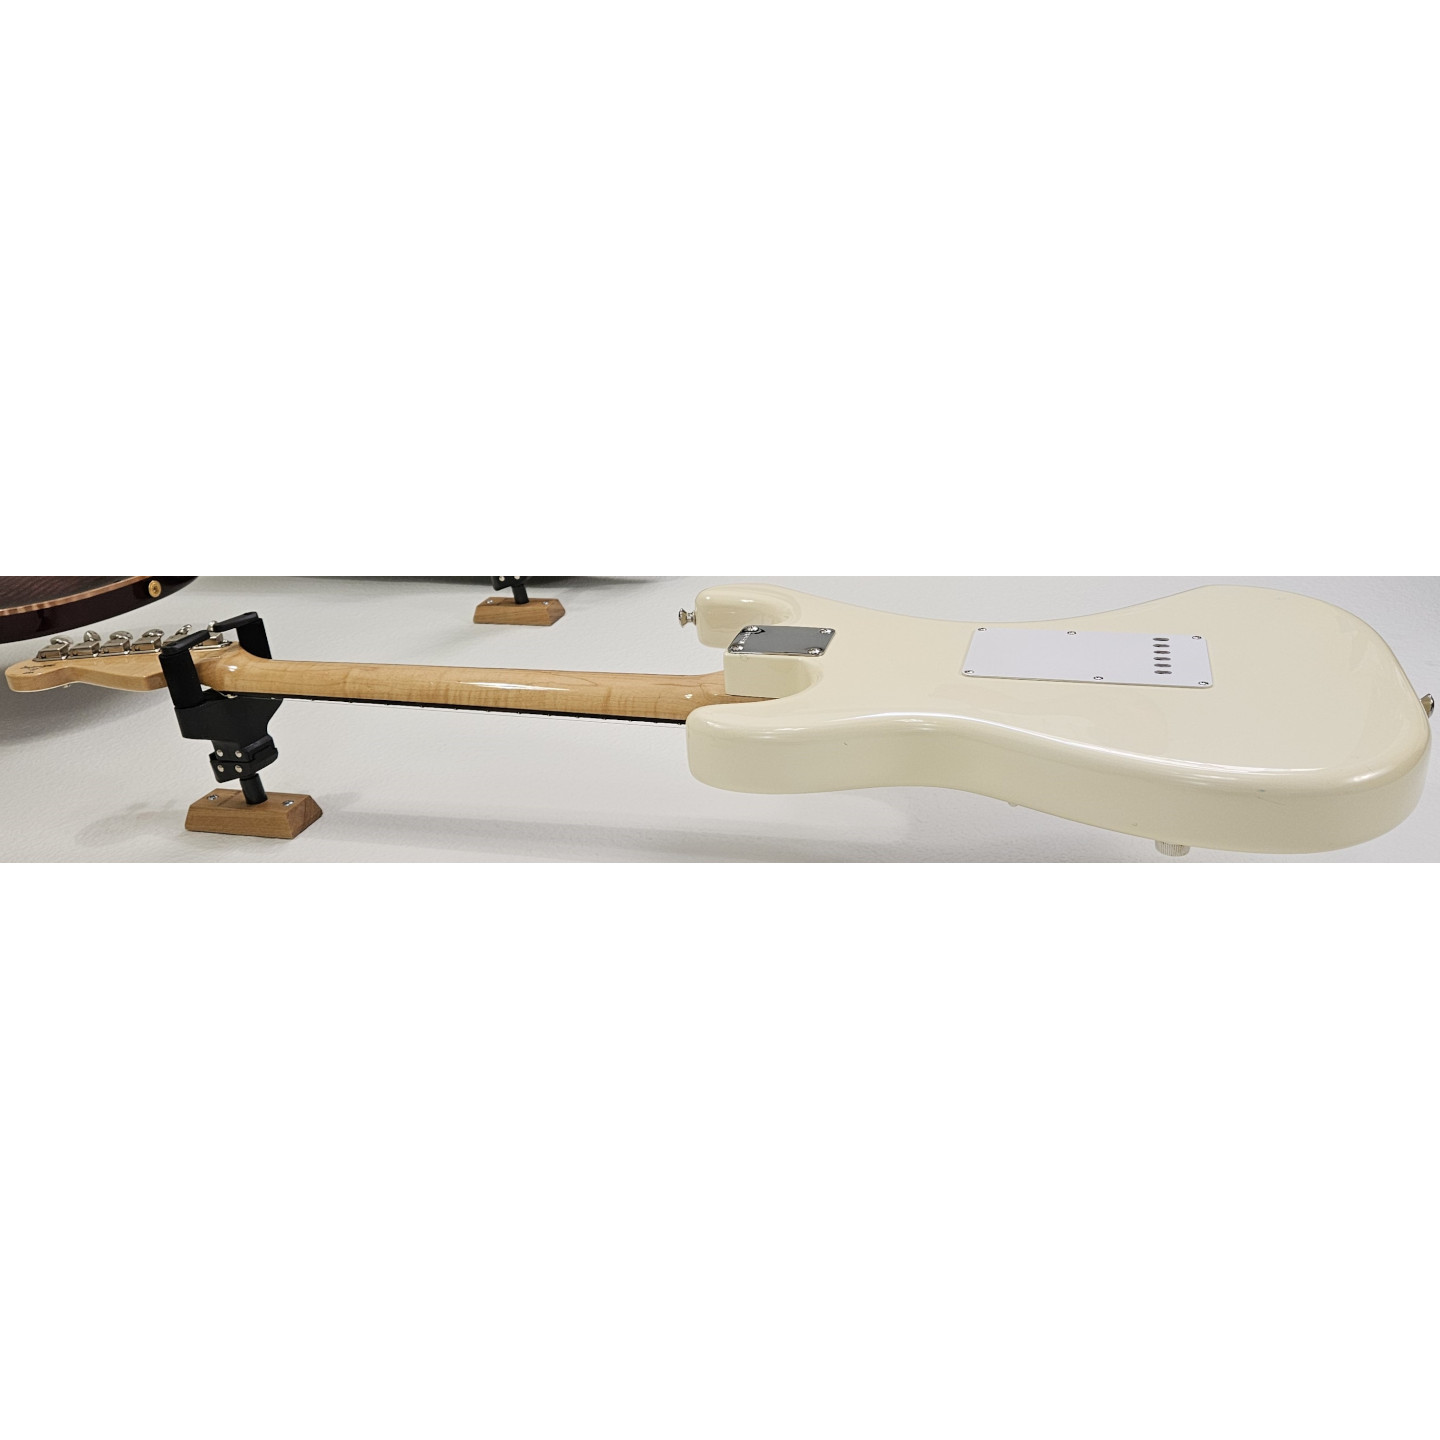 1993 Fender Custom Shop 1960 Stratocaster Alpine White Matching Headstock Vintage Electric Guitar